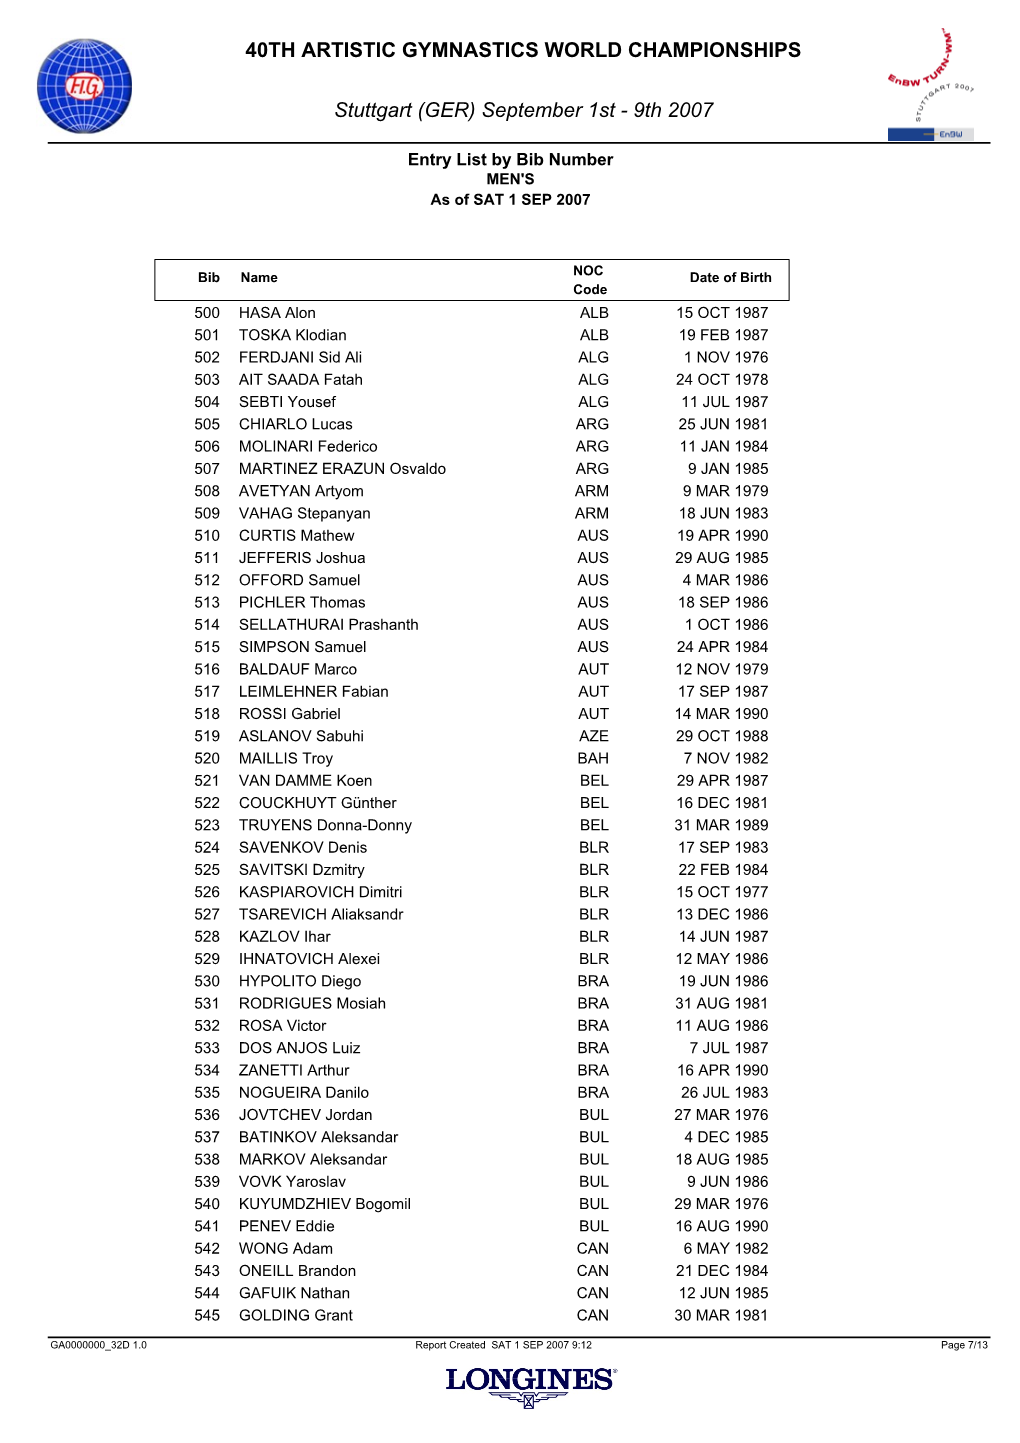 Entry List by Bib Number MEN's As of SAT 1 SEP 2007